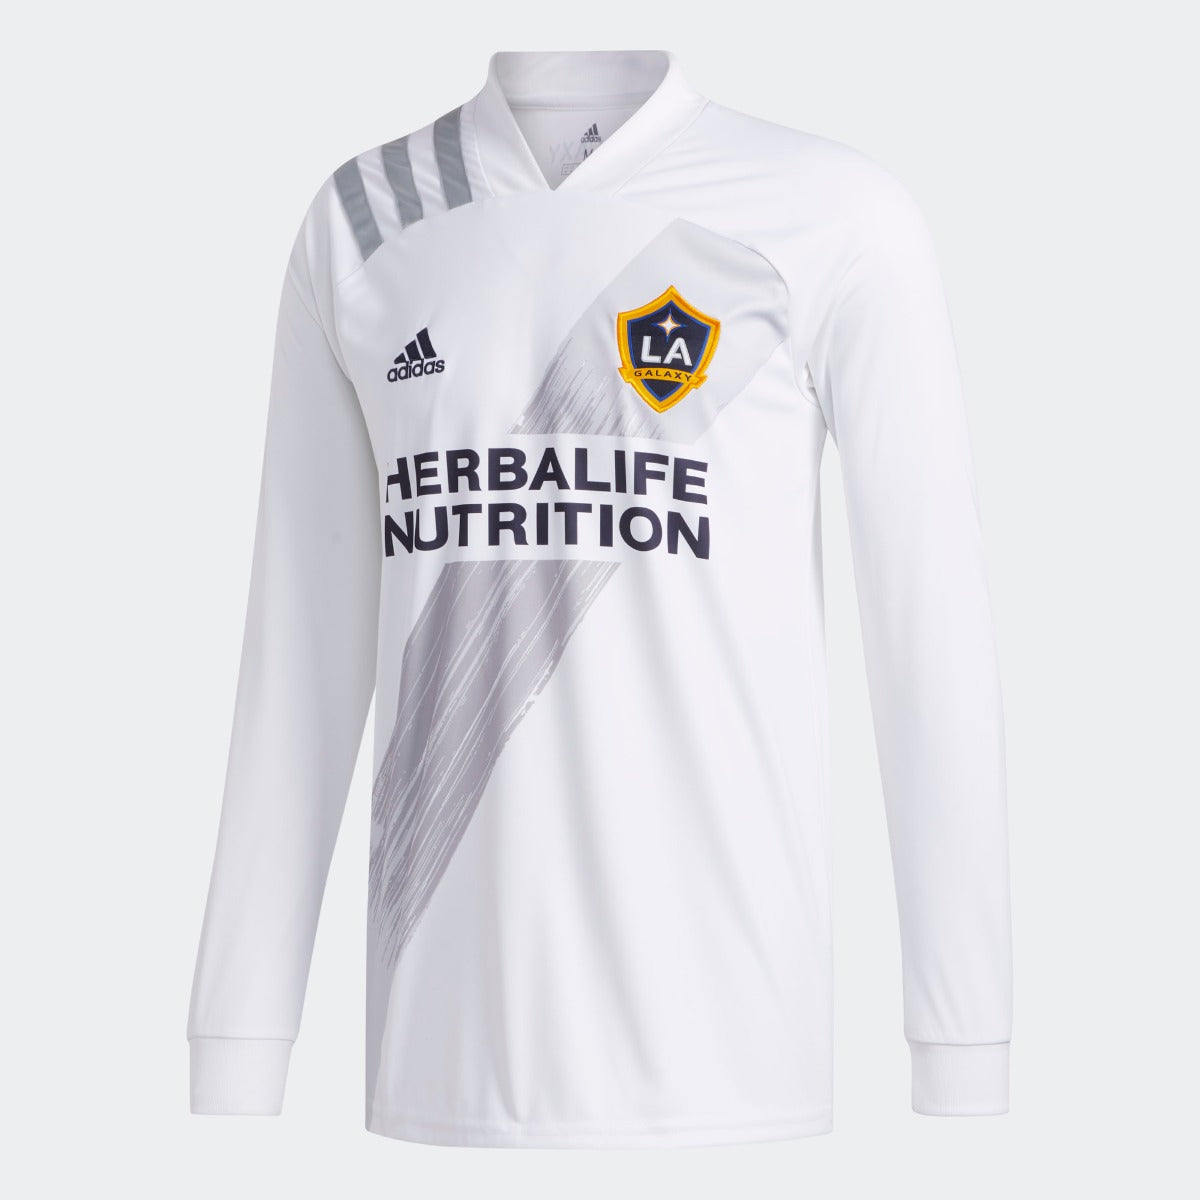 LA Galaxy adidas Go-To tee Short Sleeve Shirt Men's White Used